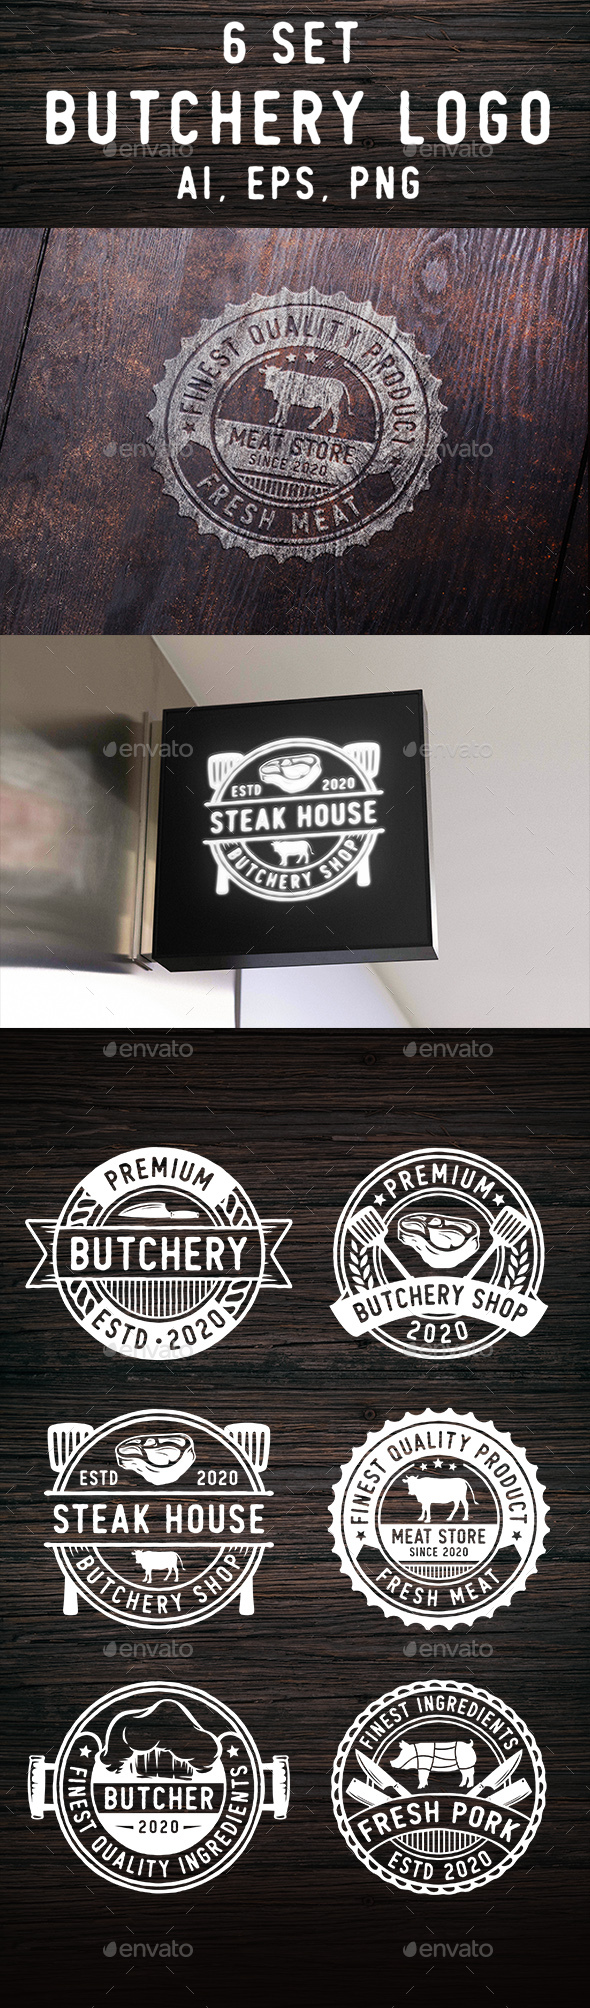 6 Set of Butchery Badge and Emblems